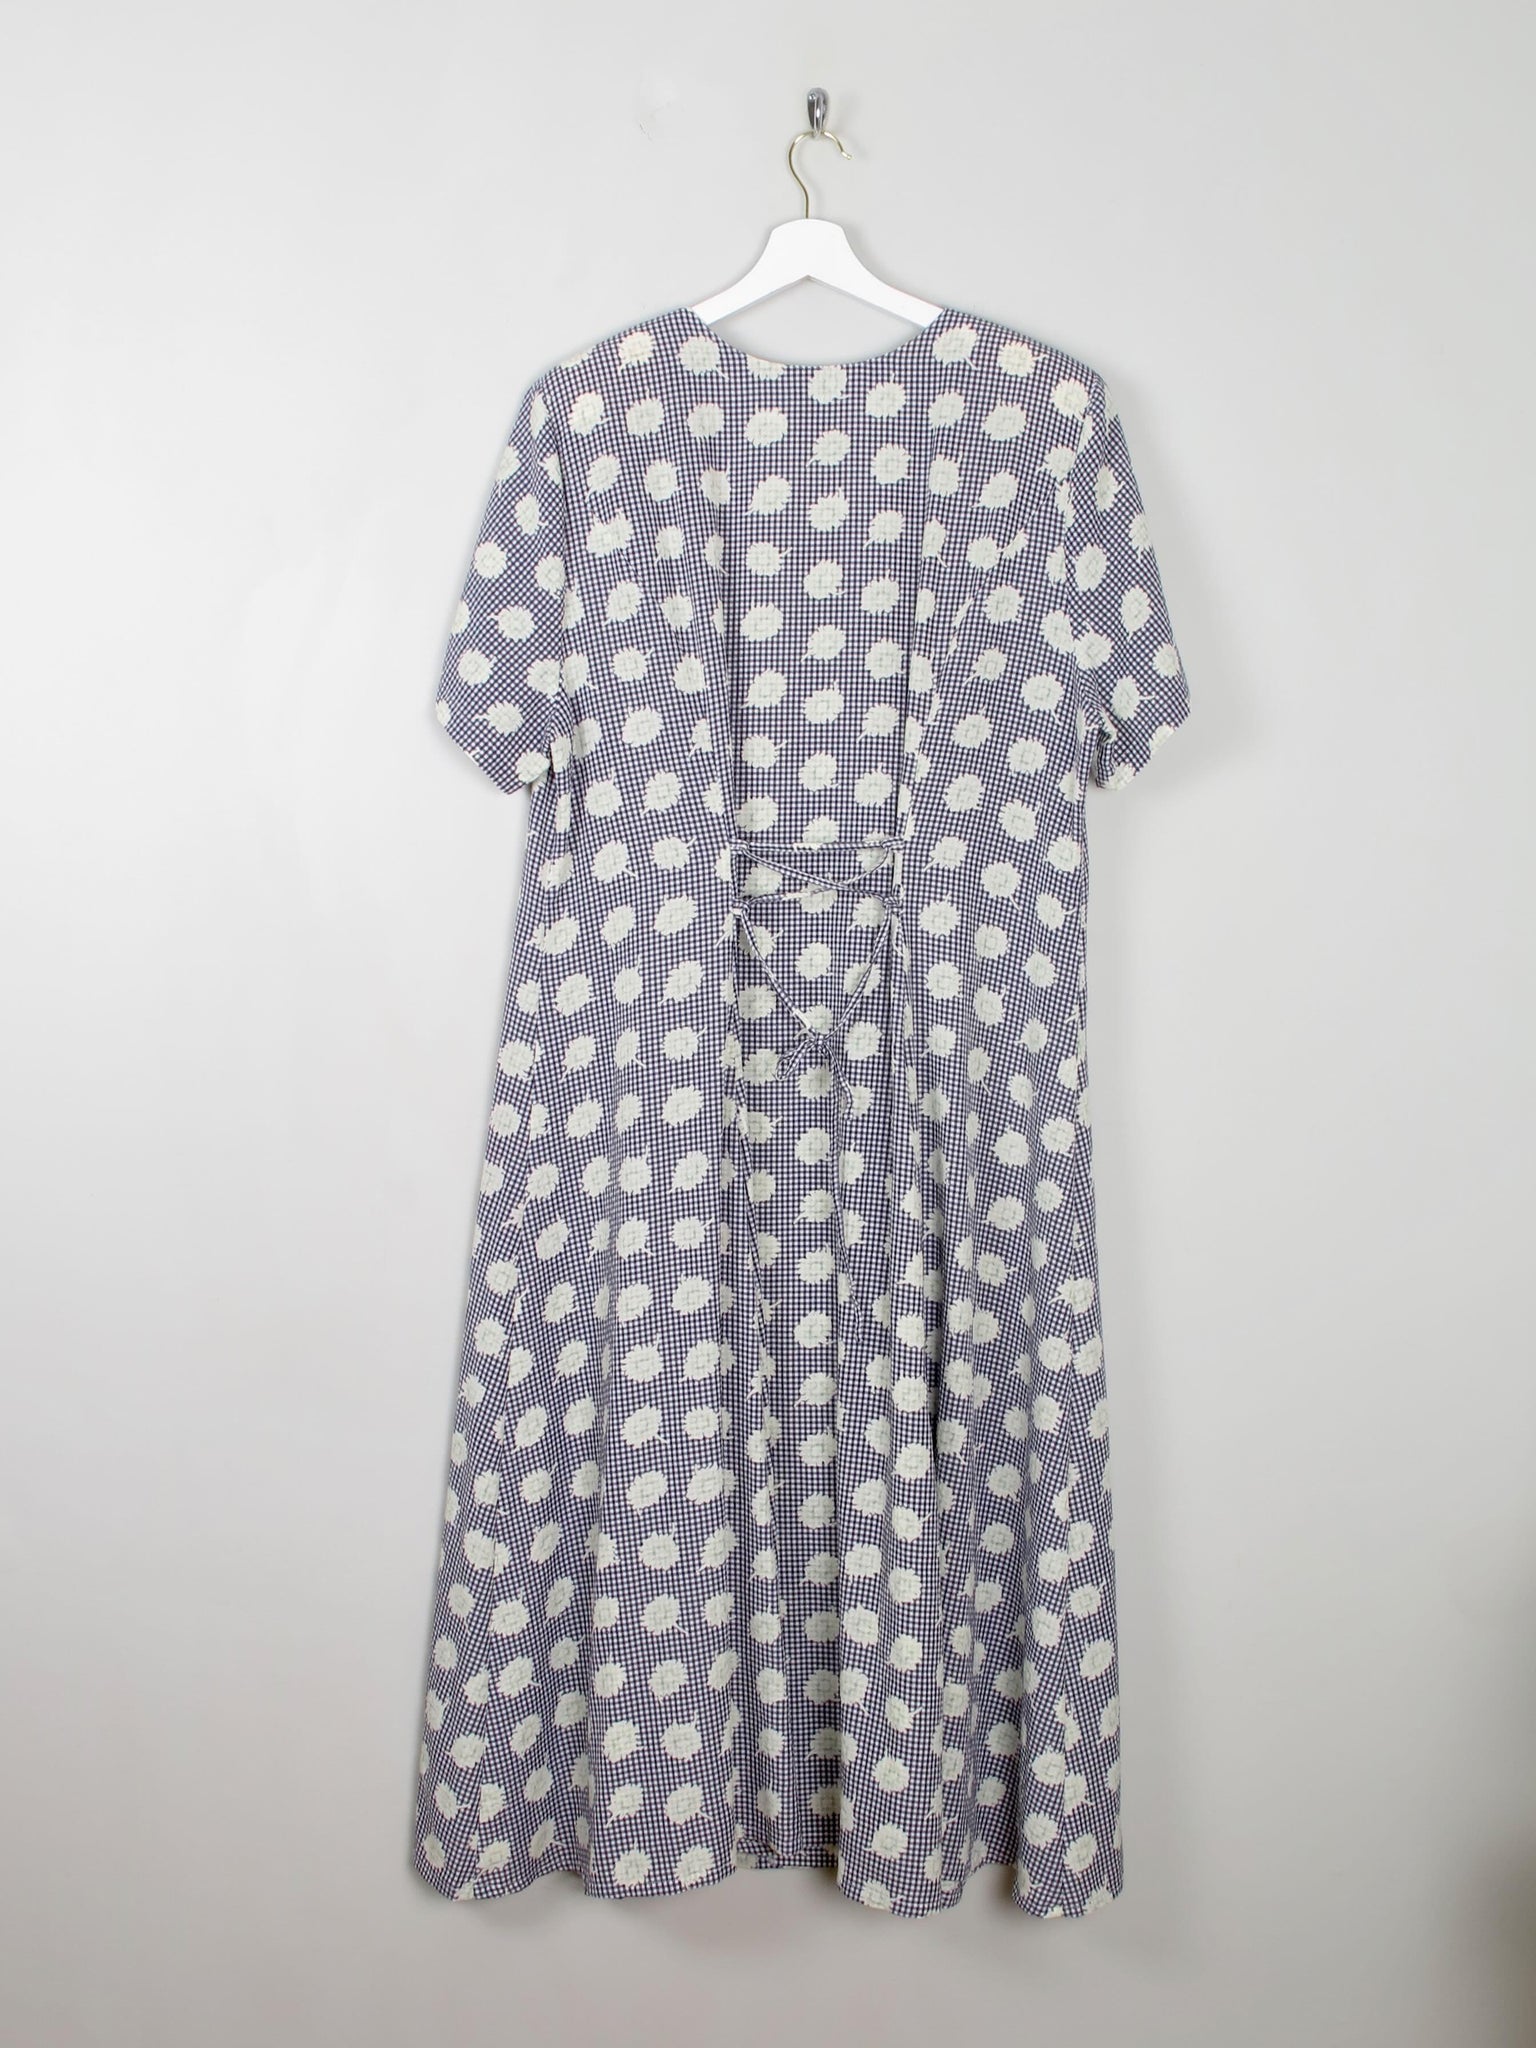 Vintage Check & Floral Dress Button Down Dress XL/XXL - The Harlequin